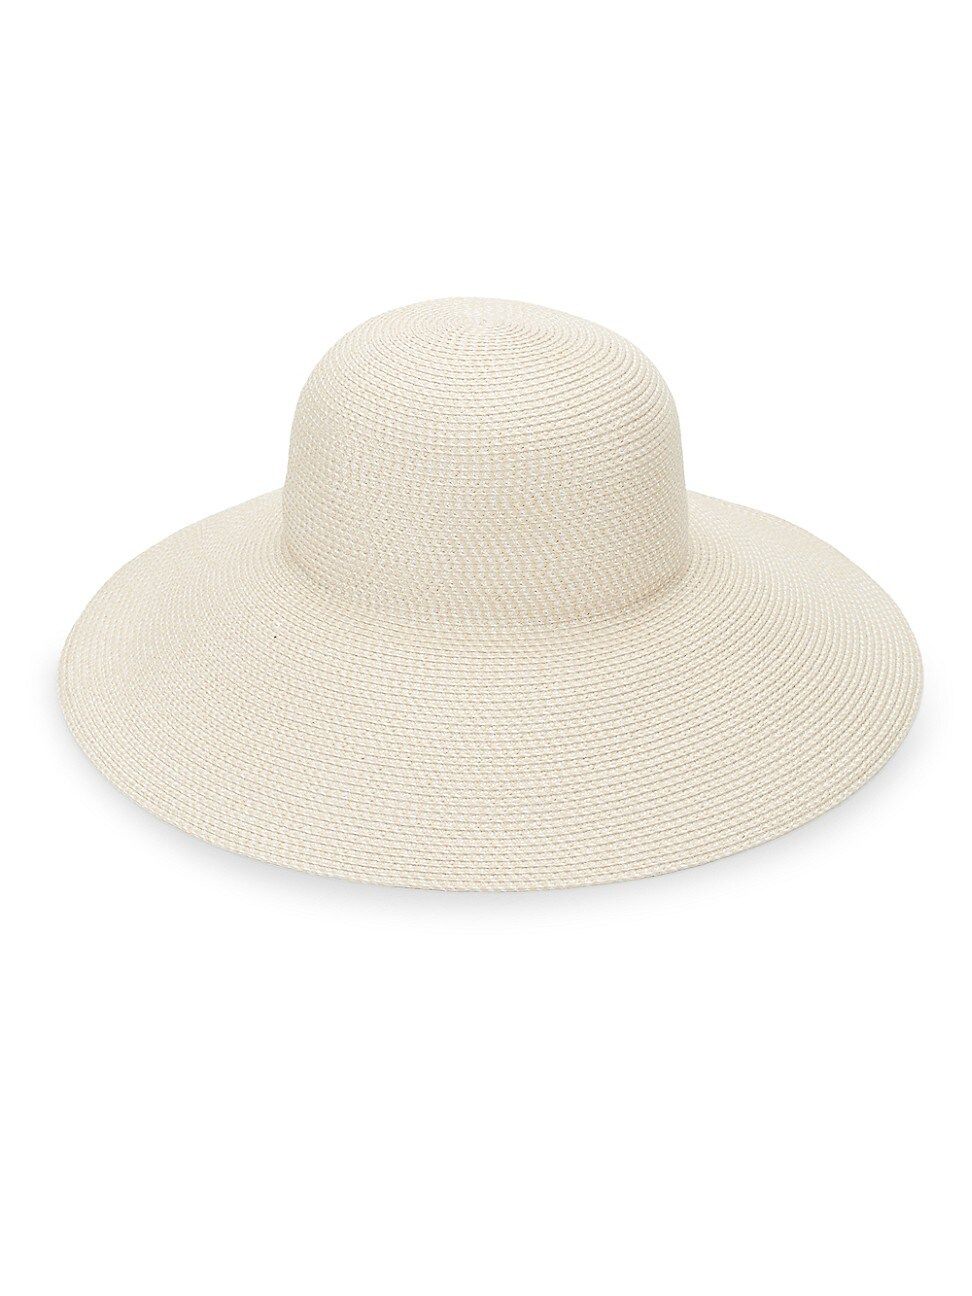 Eric Javits Women's Bella Woven Hat - Cream | Saks Fifth Avenue